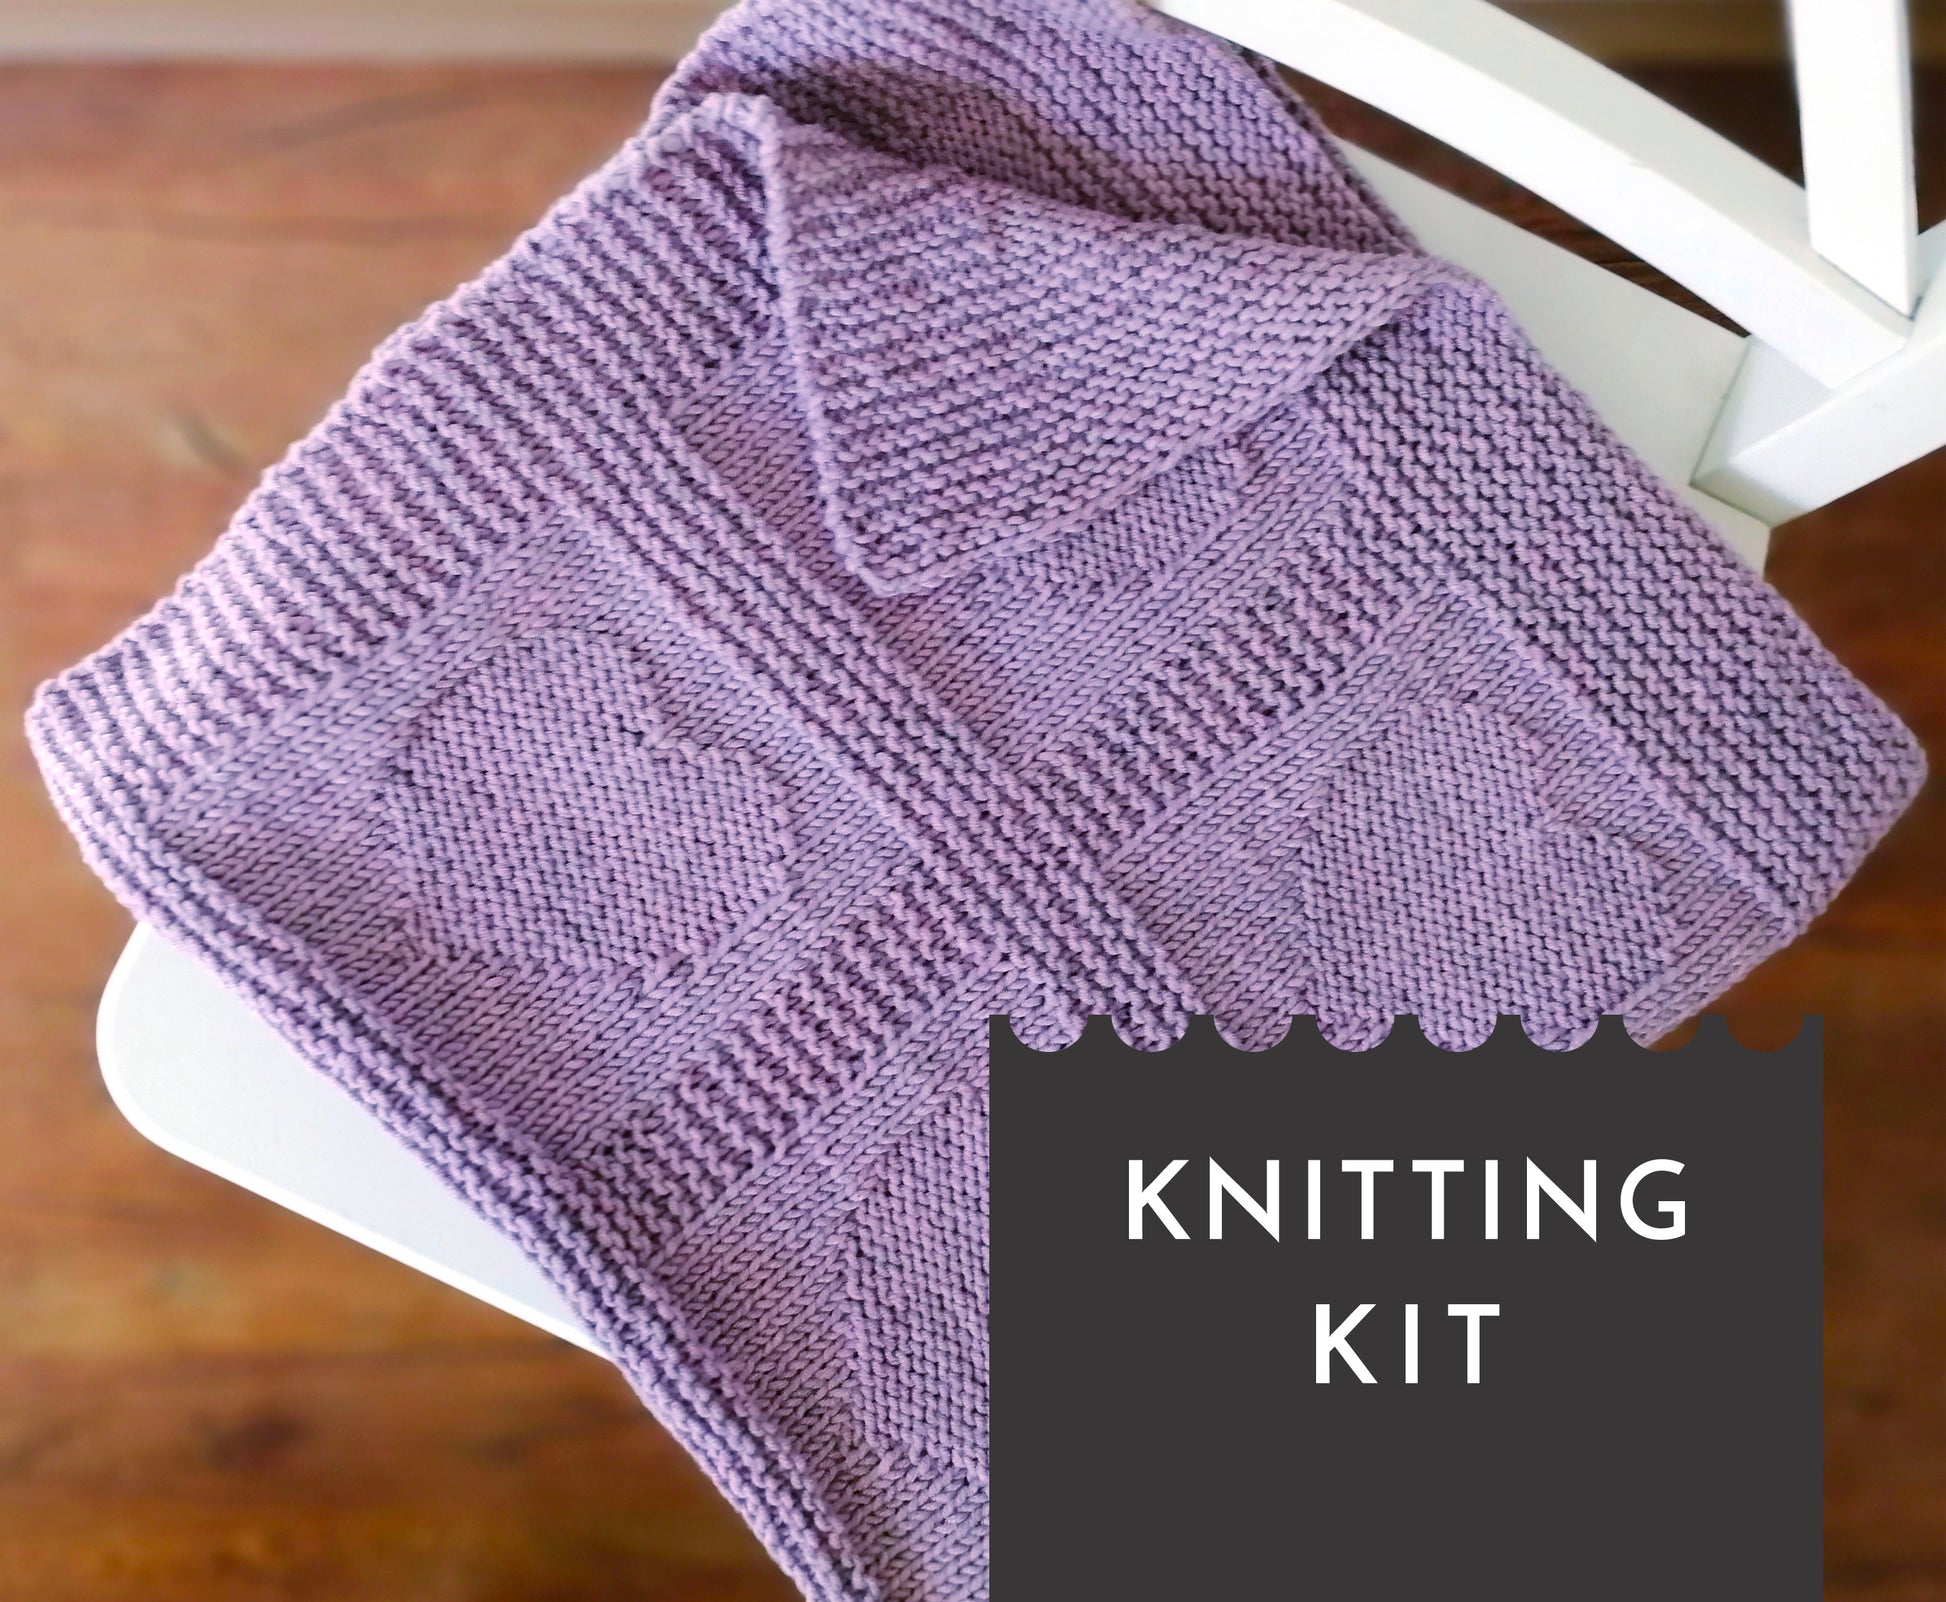 Purple superwash merino wool yarn hand-knitted baby blanket in Hearts knitting pattern